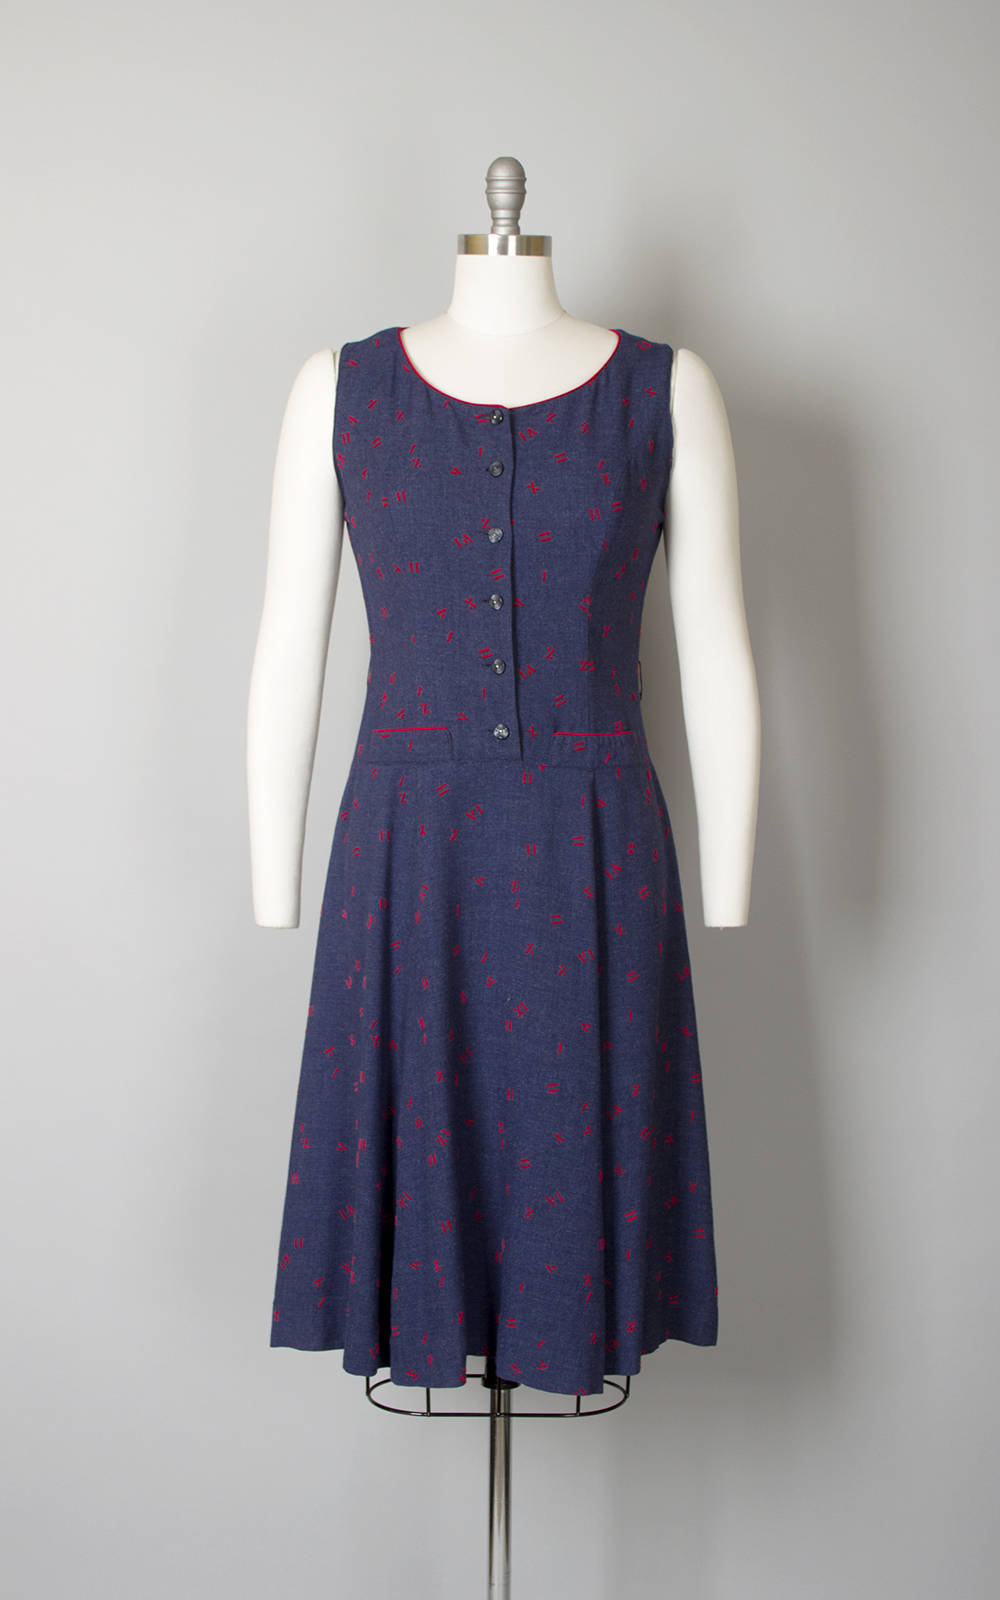 Vintage 1940s Dress | 40s Novelty Print Roman Numerals Cotton Flocked Full Skirt Navy Blue Red Shirtwaist Day Dress (medium)